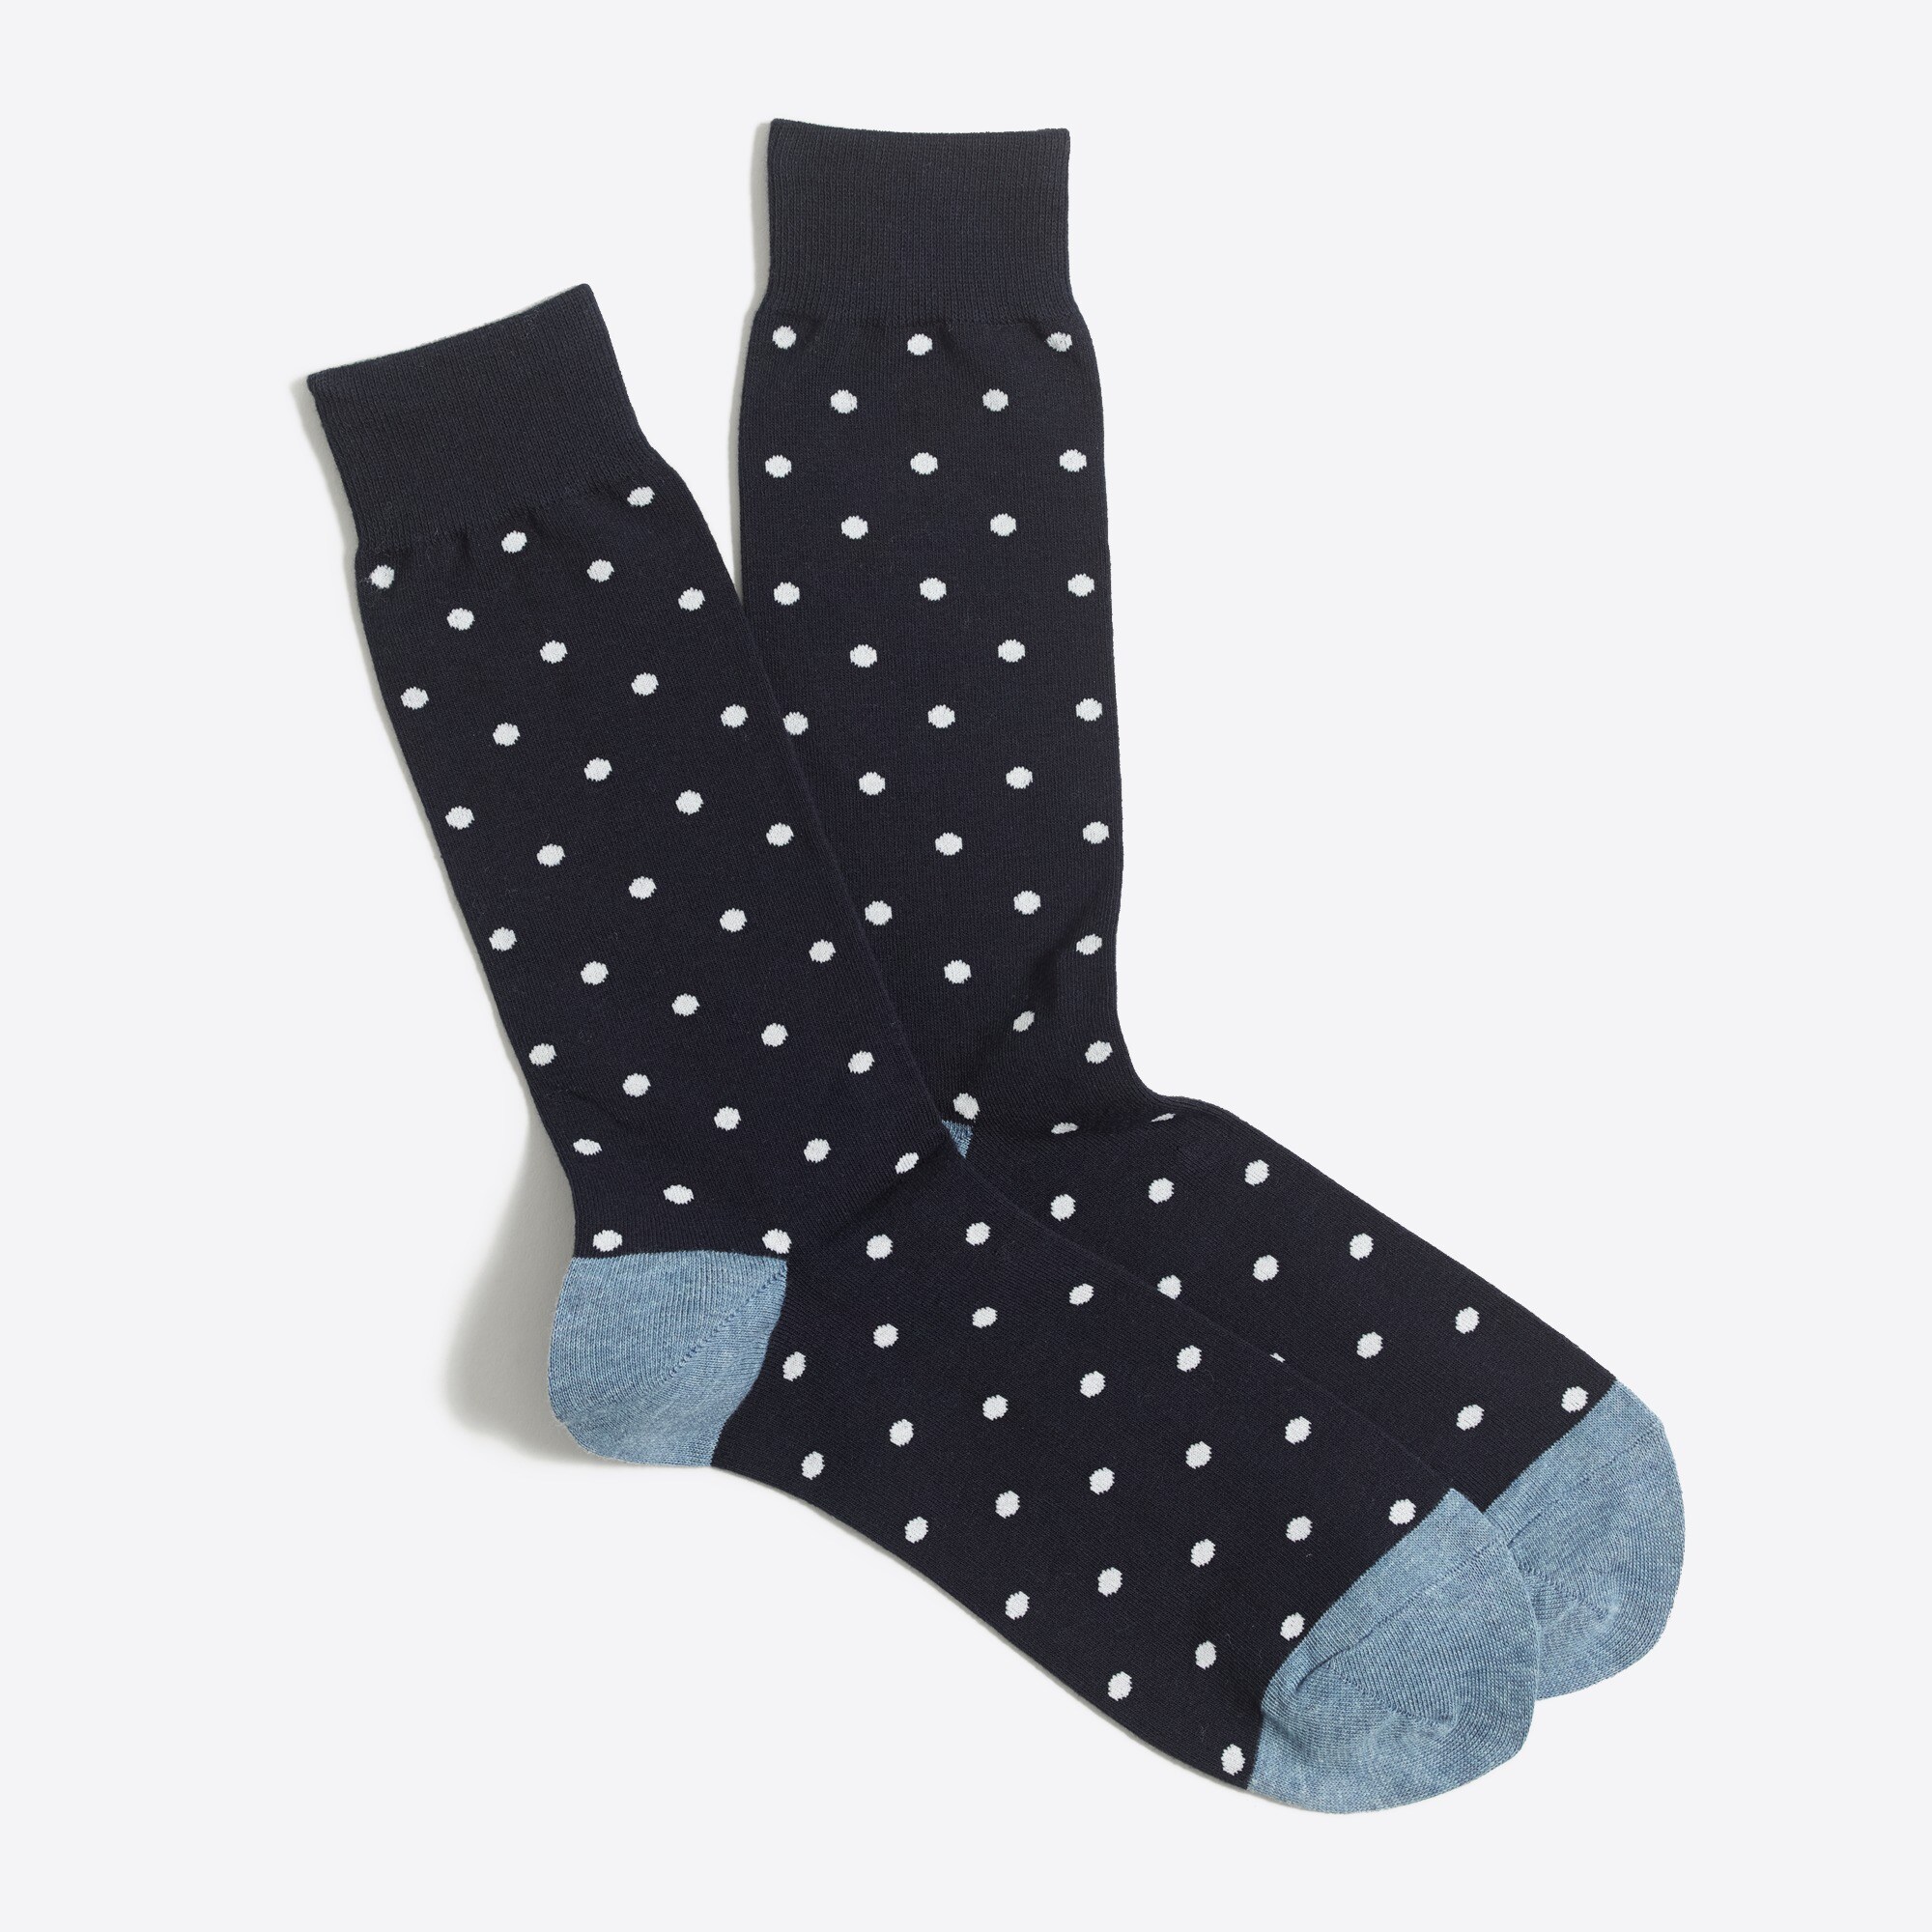  Dot socks